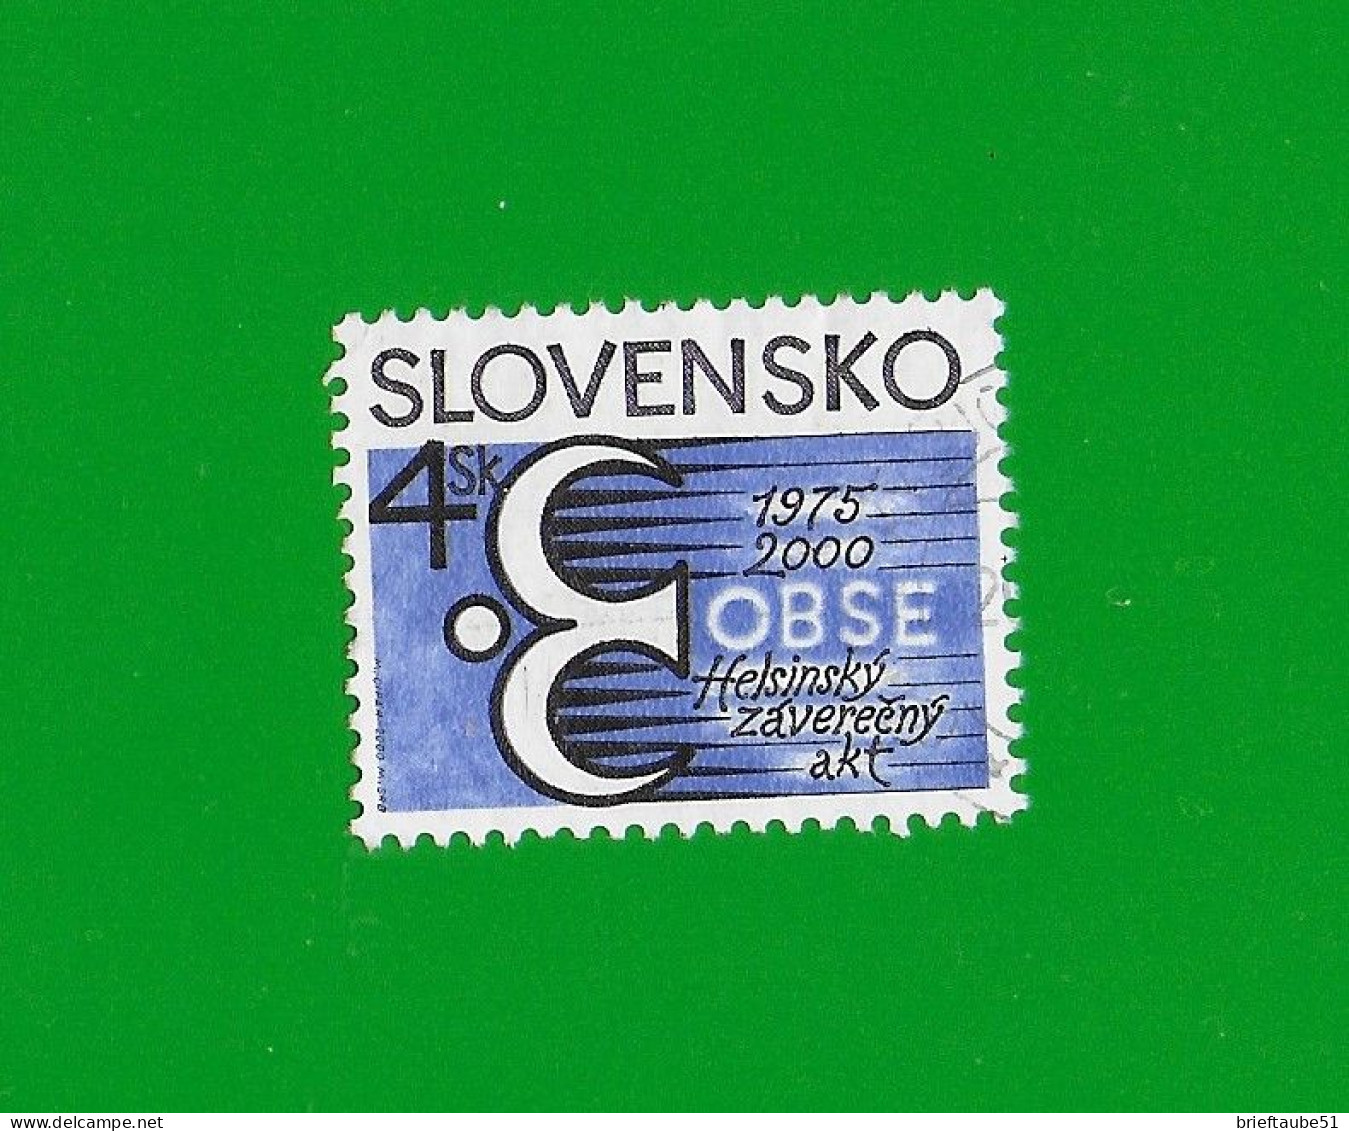 SLOVAKIA REPUBLIC 2000 Gestempelt°Used/Bedarf  MiNr. 374 #  "Helsinki Konferenz # KSZE" - Used Stamps